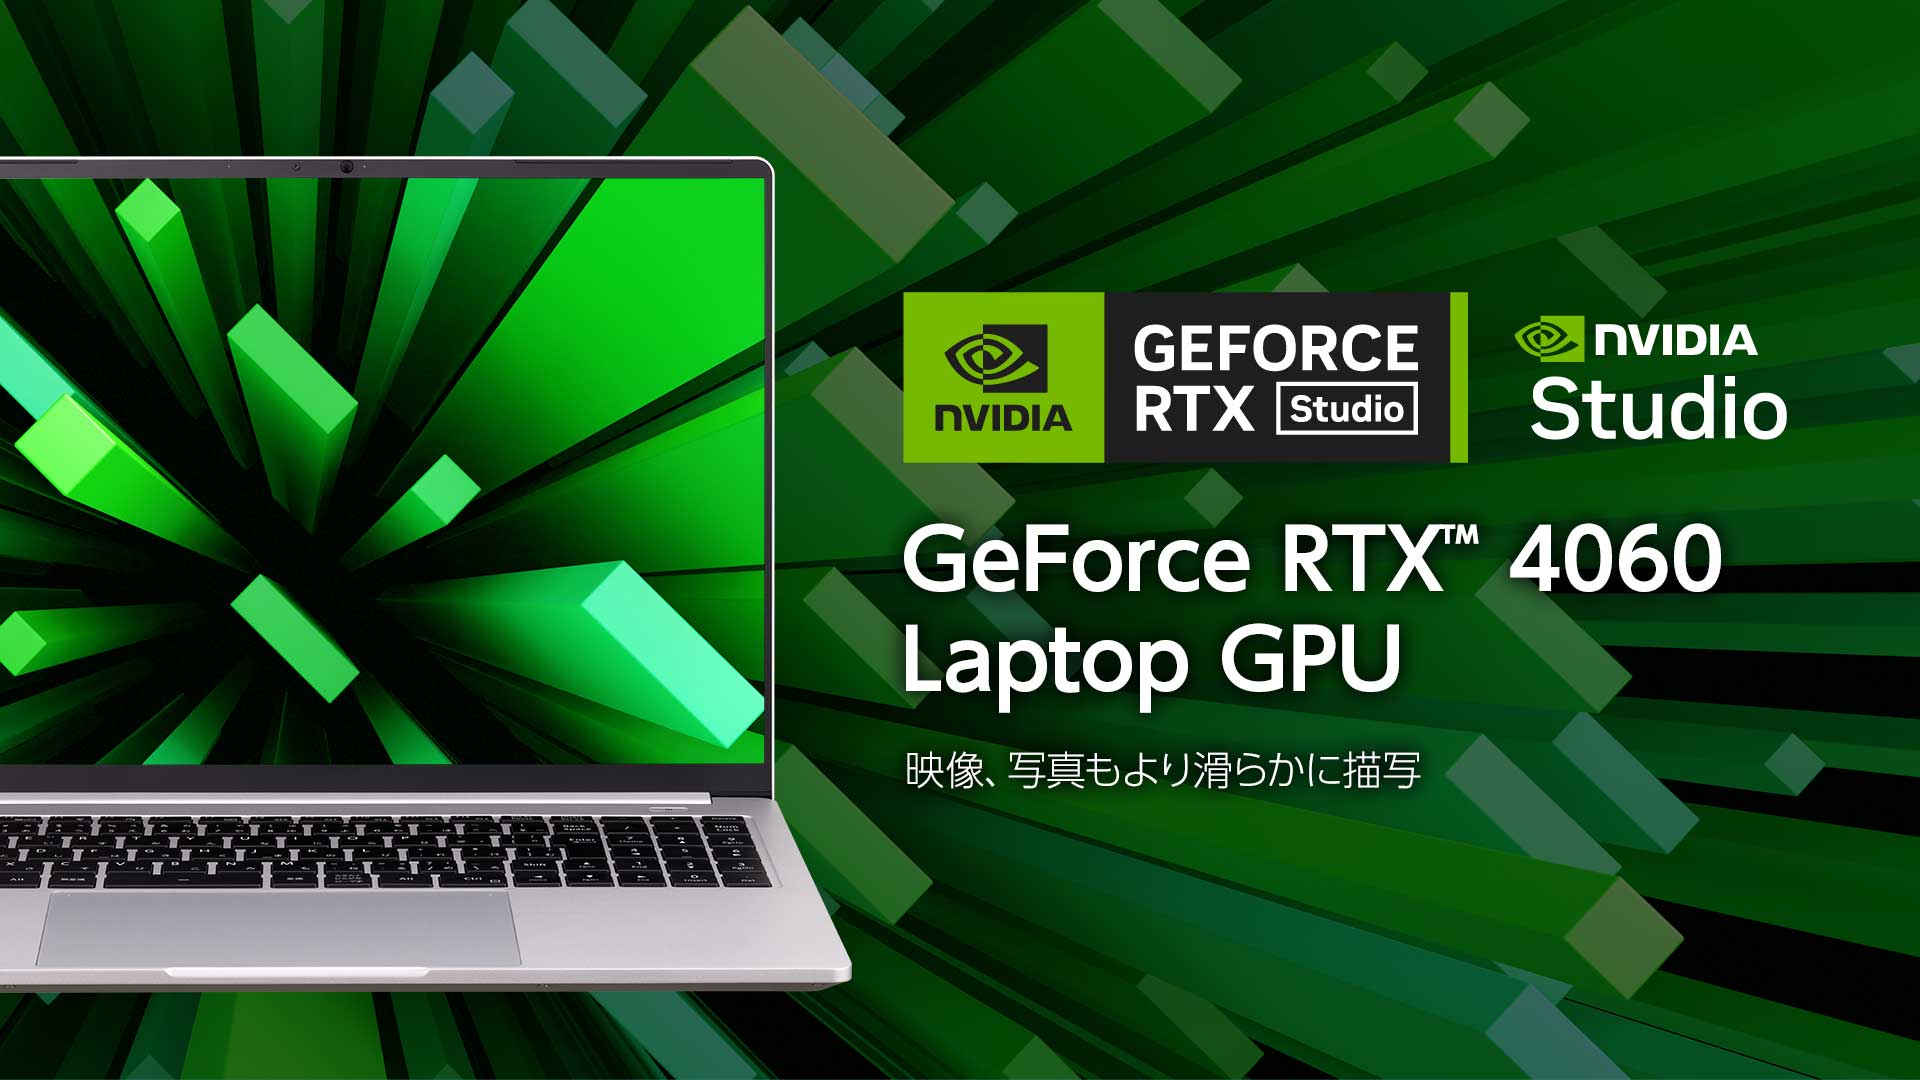 NVIDIA GeForce RTX 4060 Laptop GPU